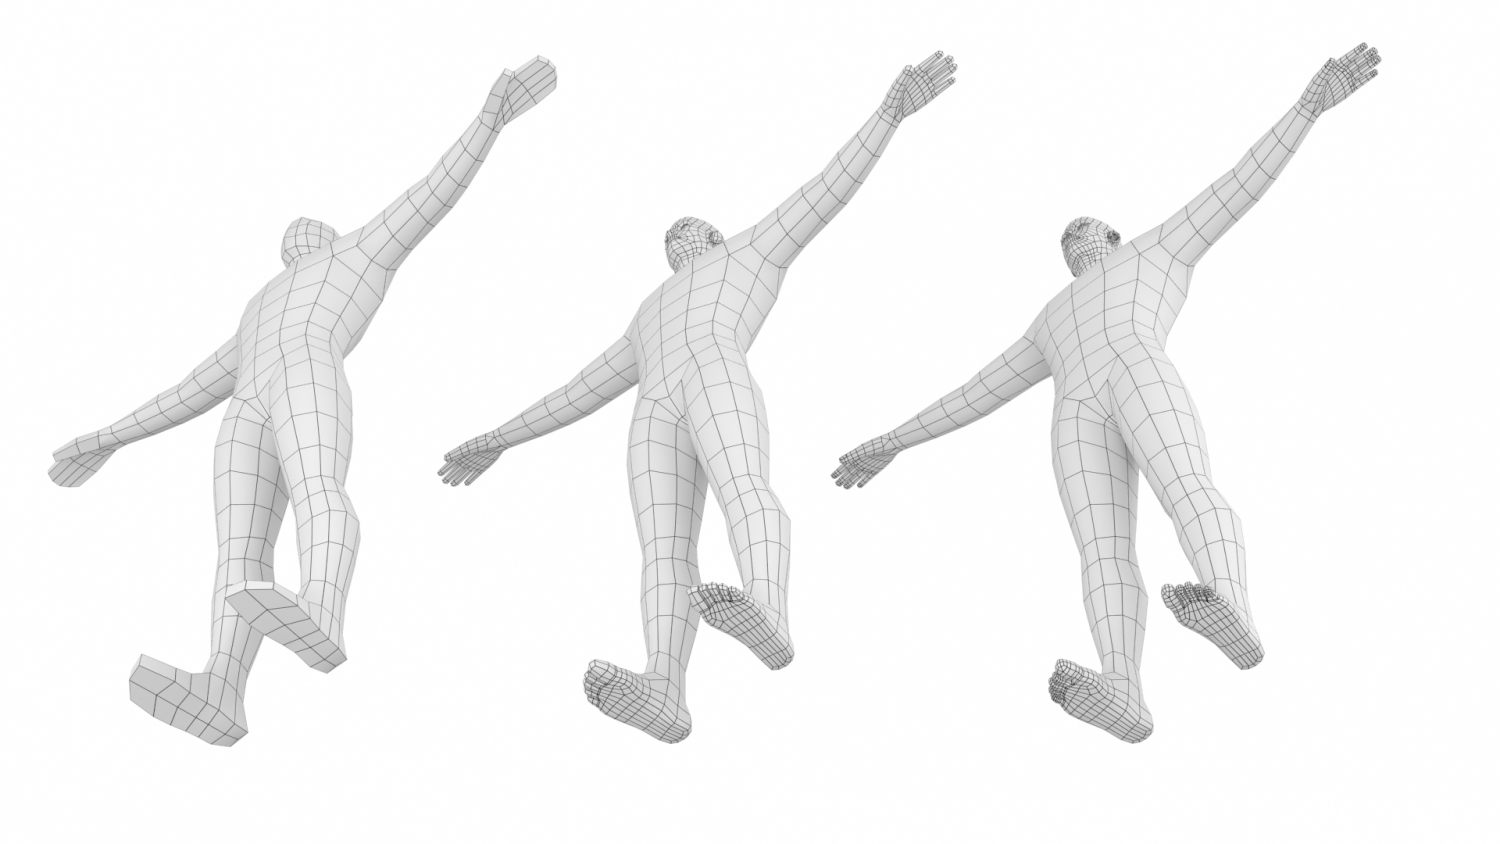 Cute Stylized Stickman in T-Pose 3D Model by Valerii-Kaliuzhnyi